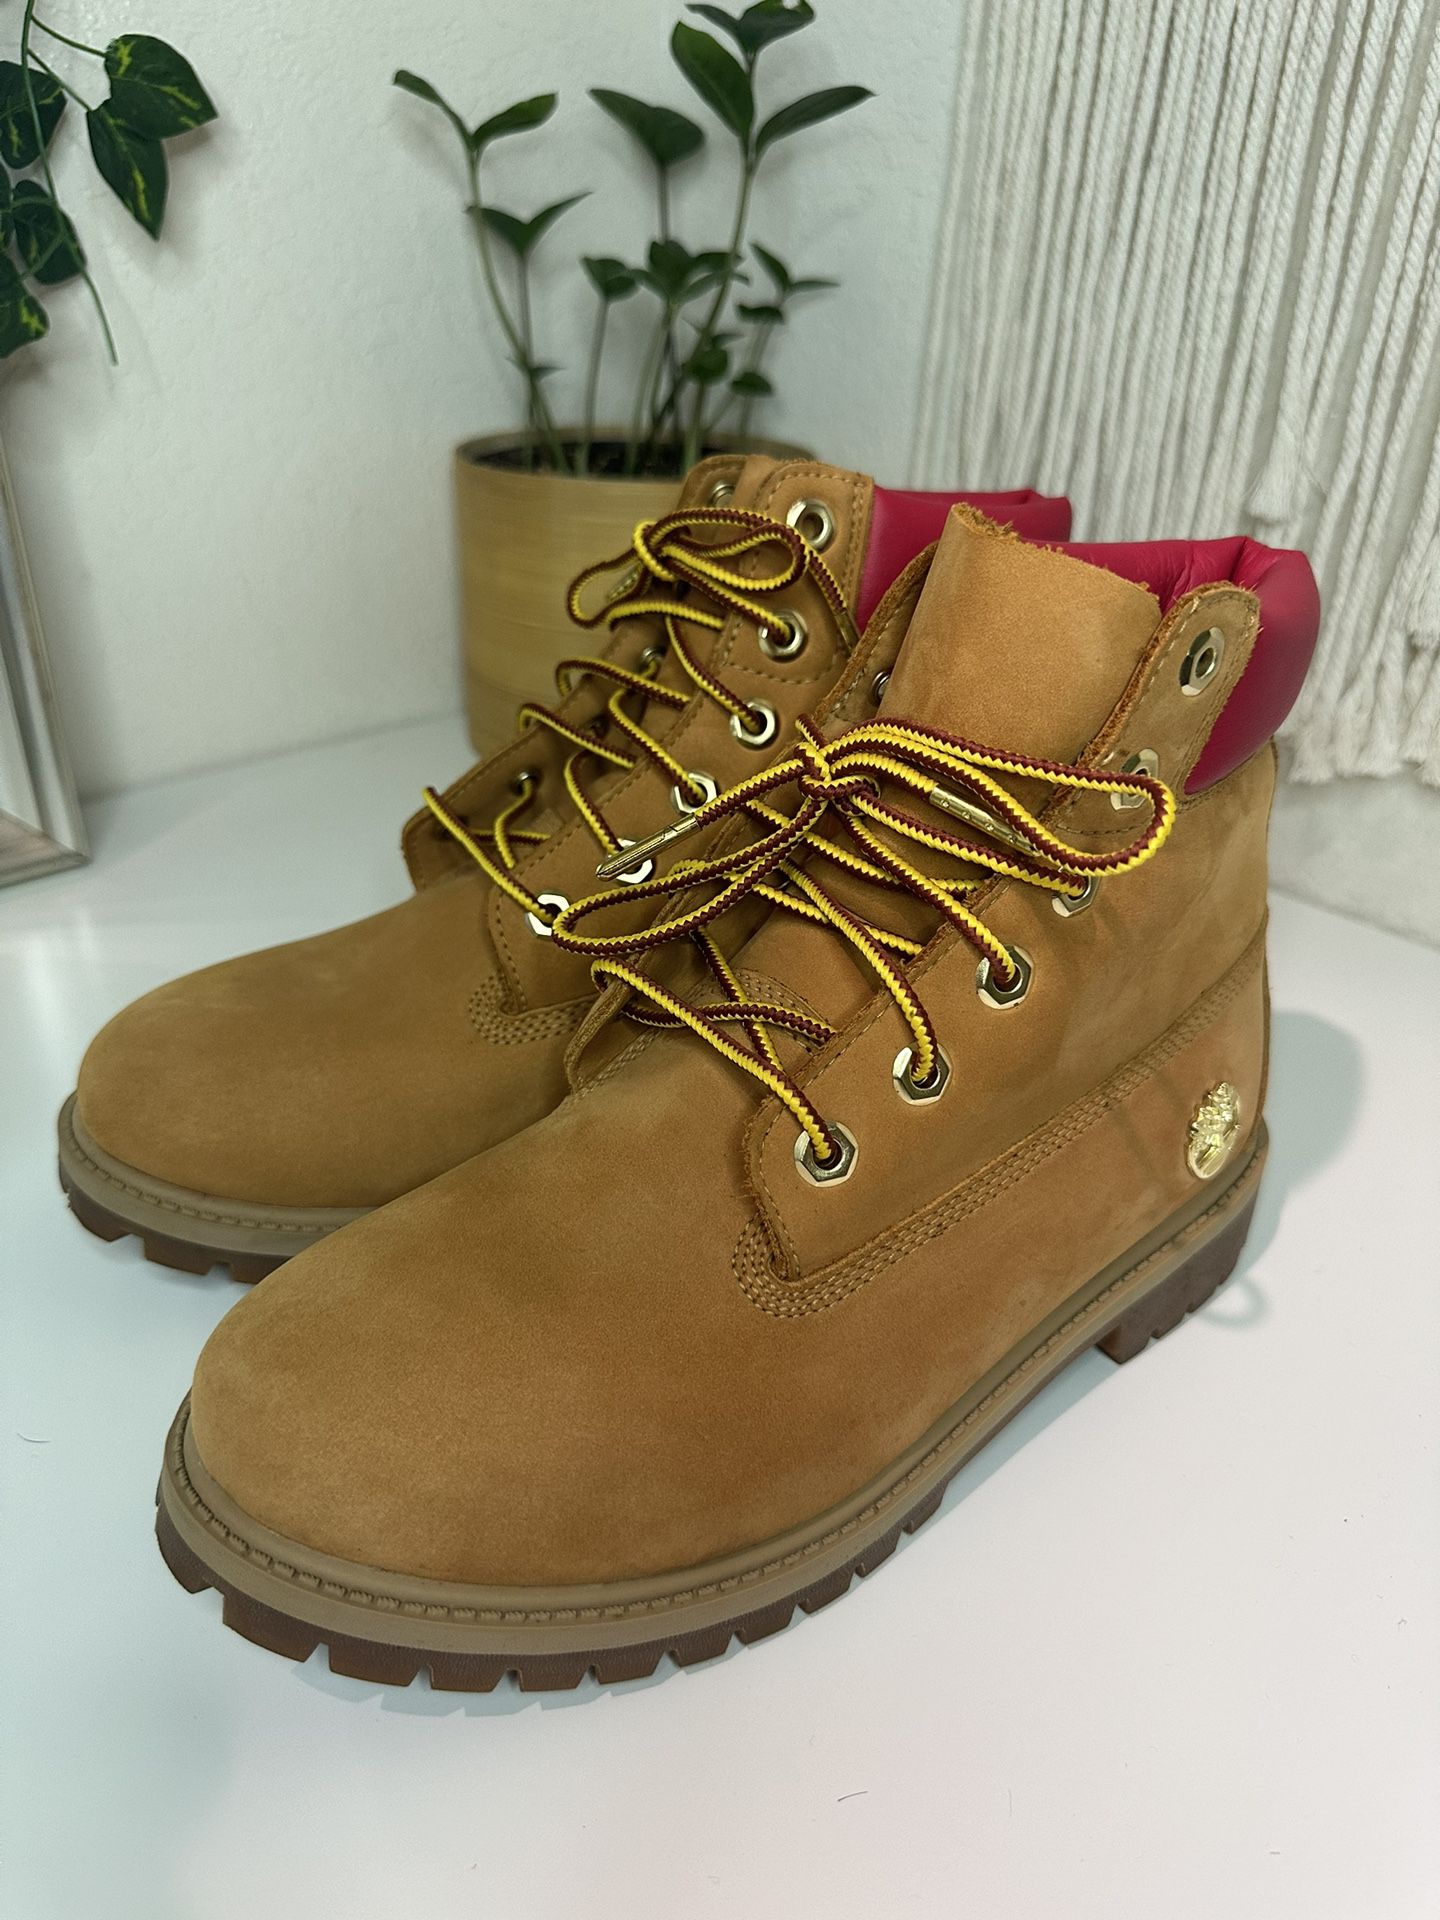 Timberland Boots  Size 6 (unisex)